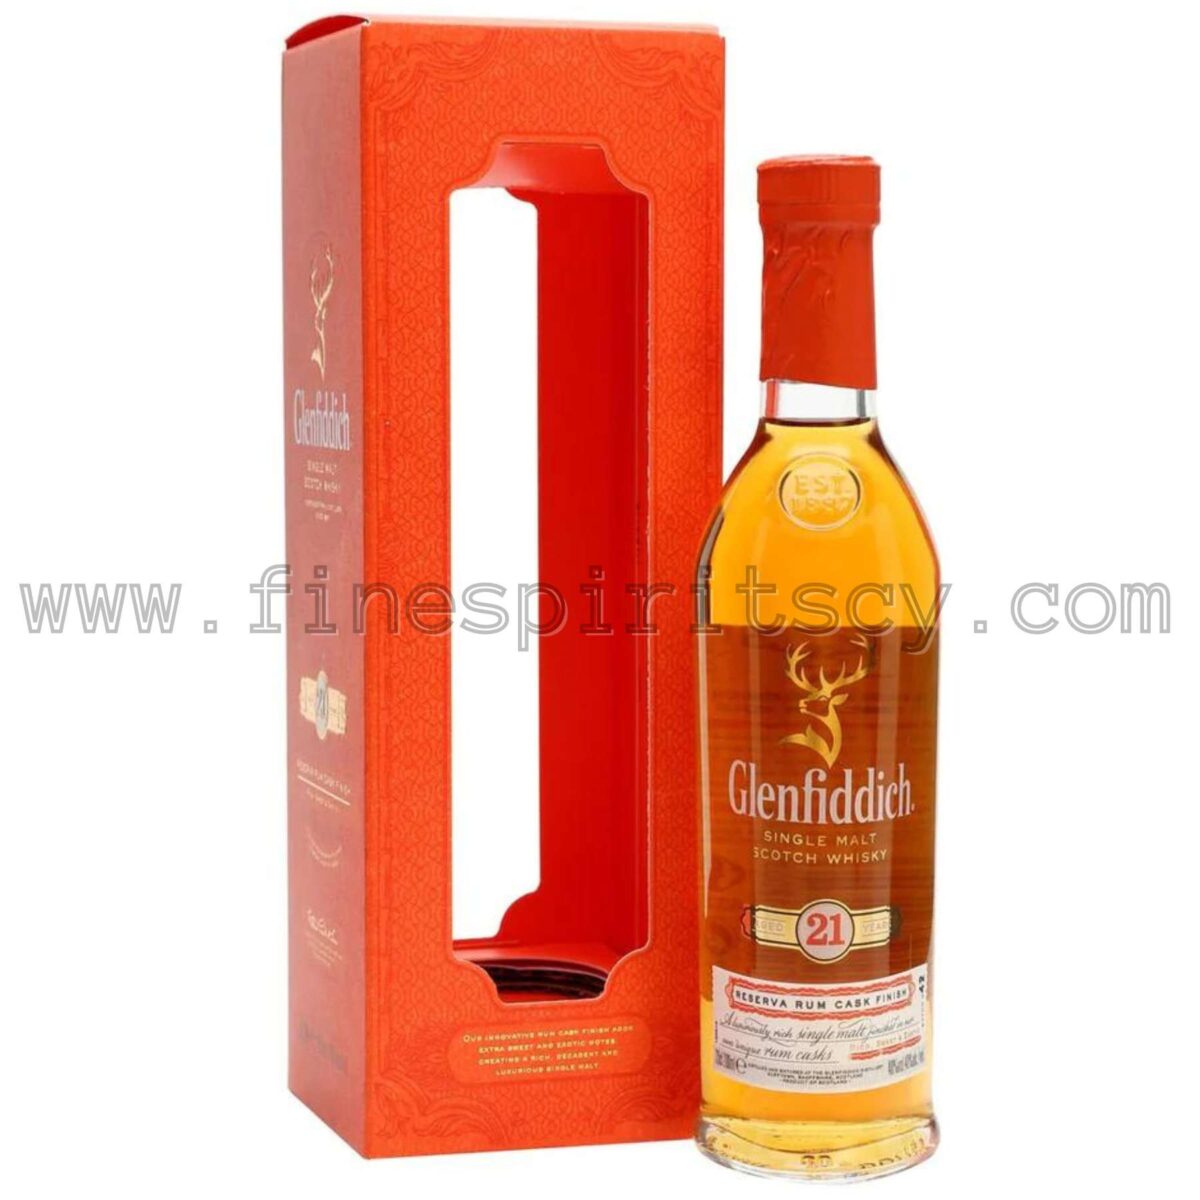 Glenfiddich 21 Year Old Gran Reserva Rum Cask Finish Cyprus 200ml 20cl 0.2L Price